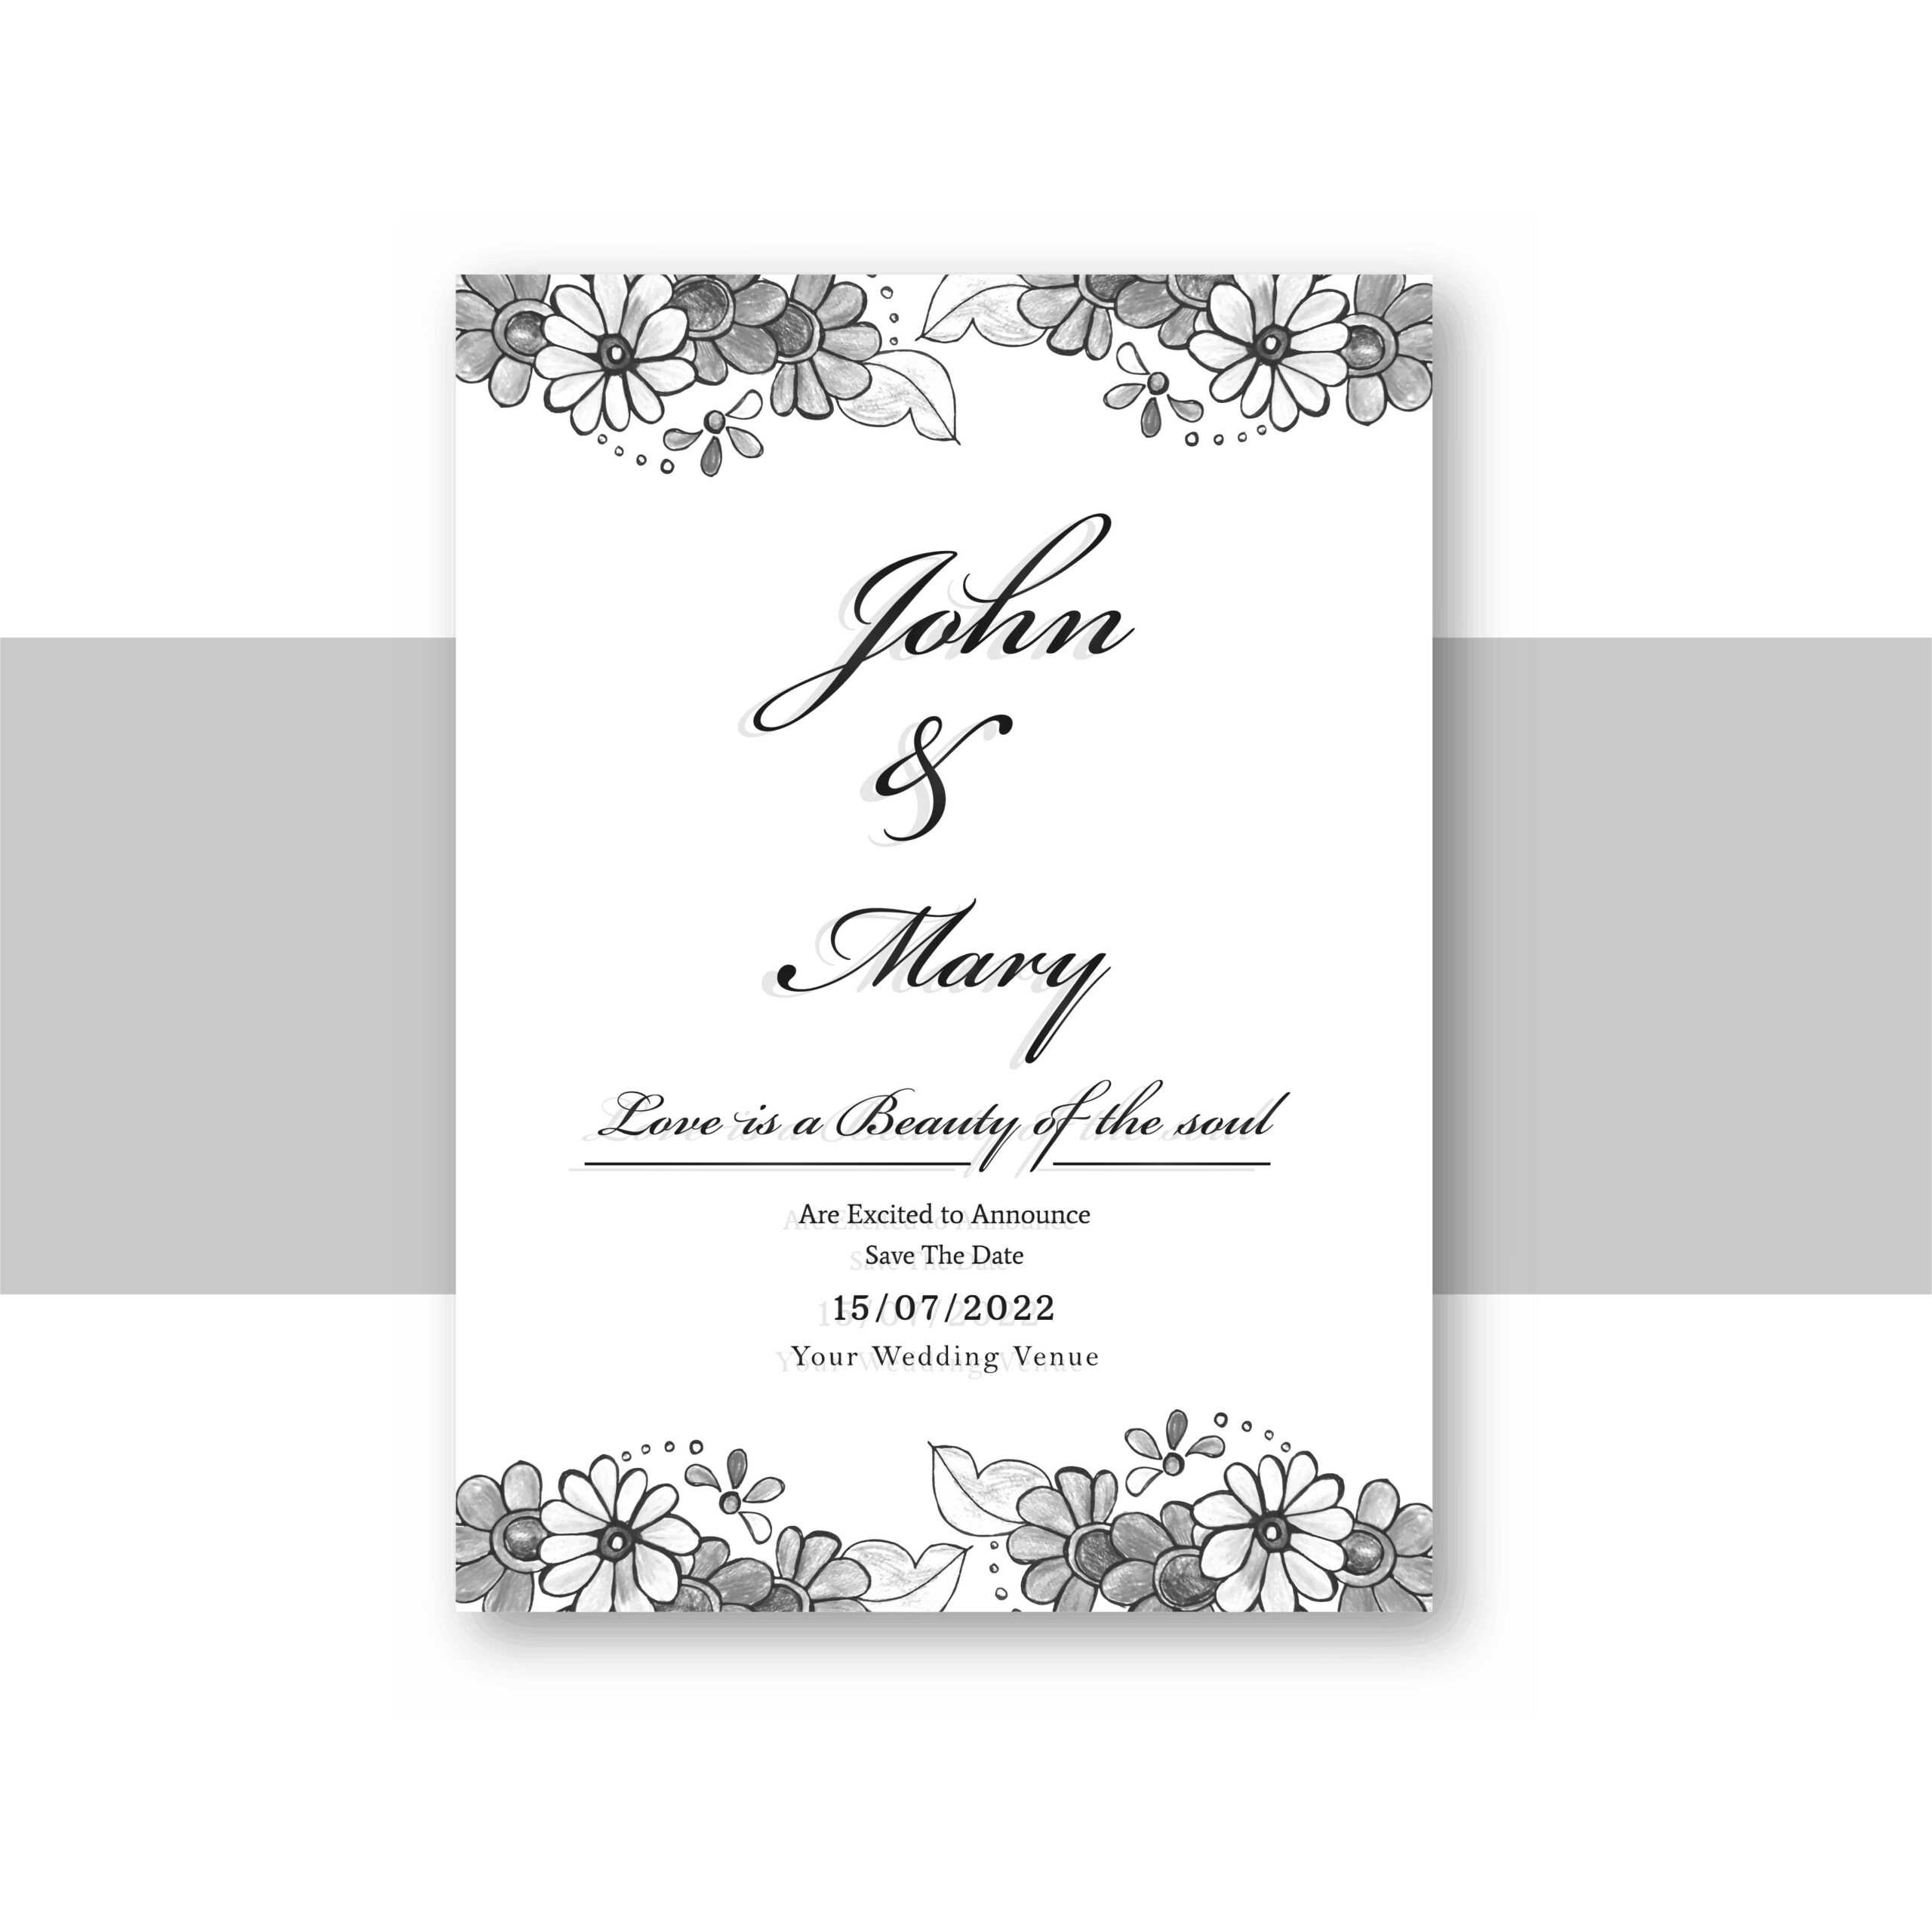 Beautiful Wedding Invitation Card Template With Decorative For Invitation Cards Templates For Marriage